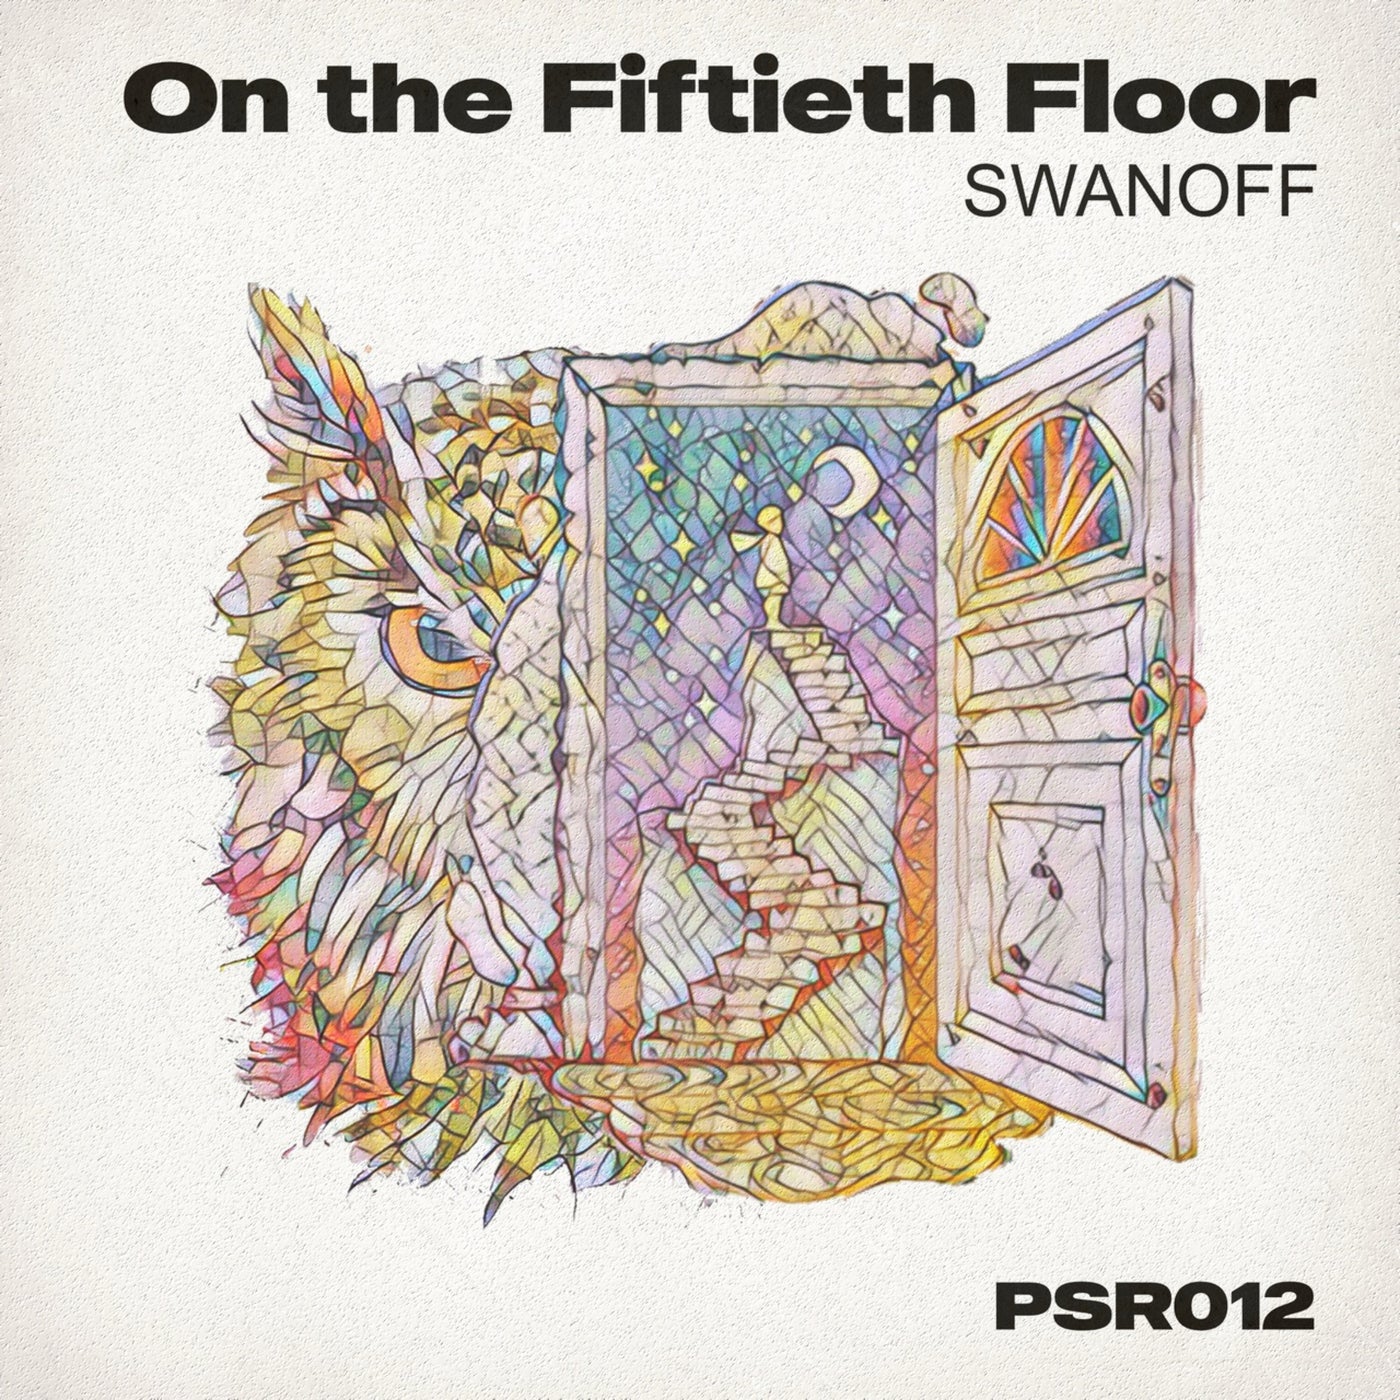 The Fiftieth Floor